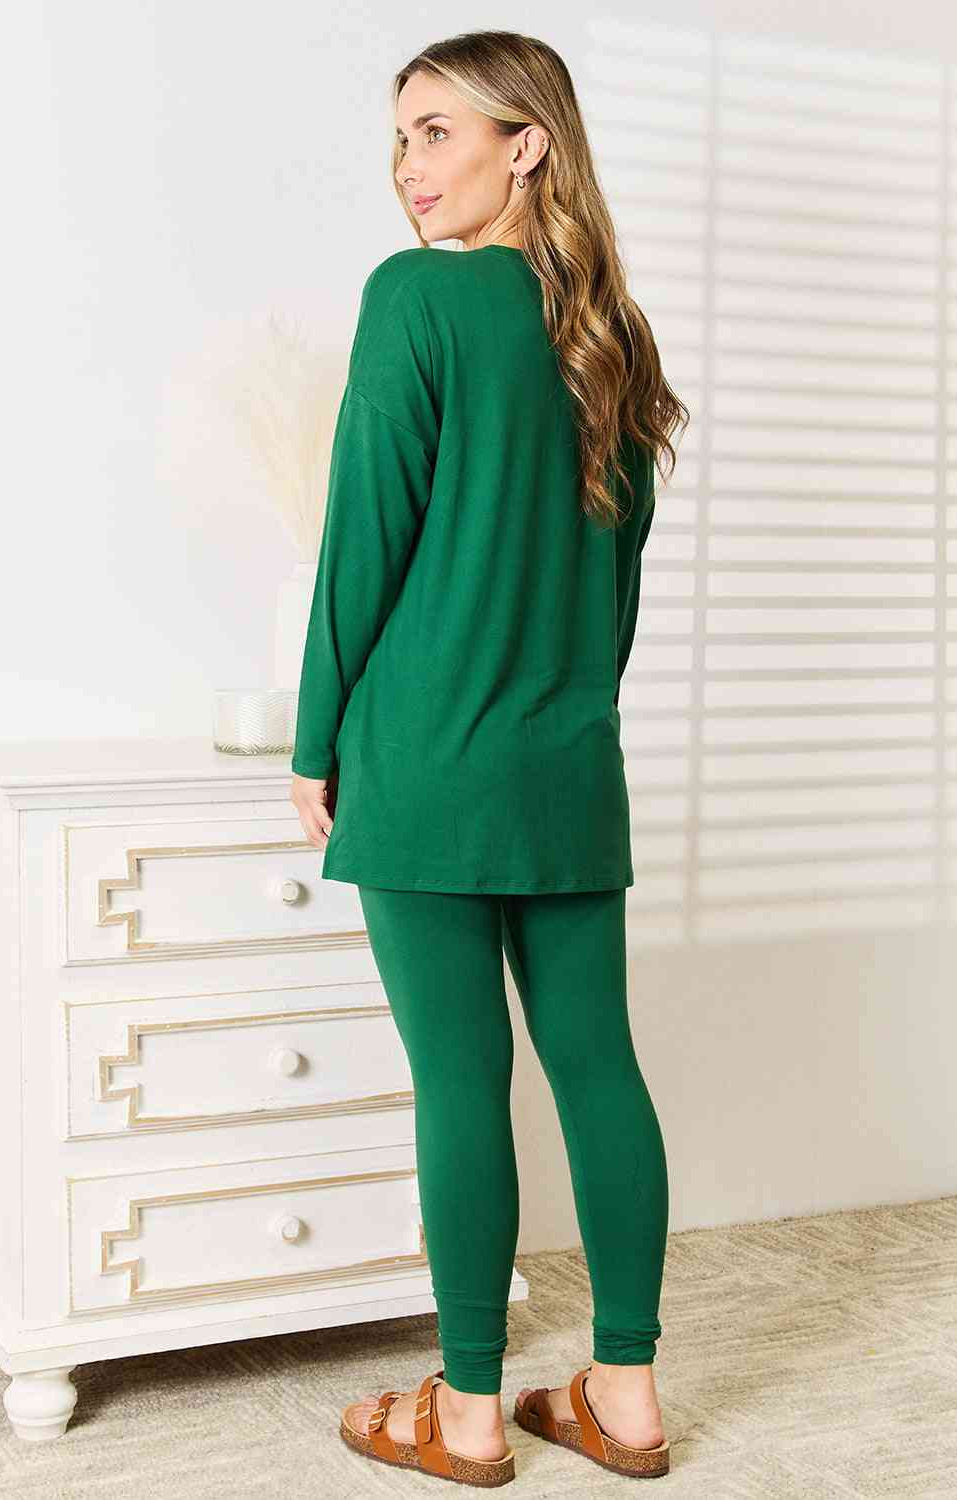 Zenana Lazy Days Full Size Long Sleeve Top and Leggings Set-Stay Foxy Boutique, Florissant, Missouri